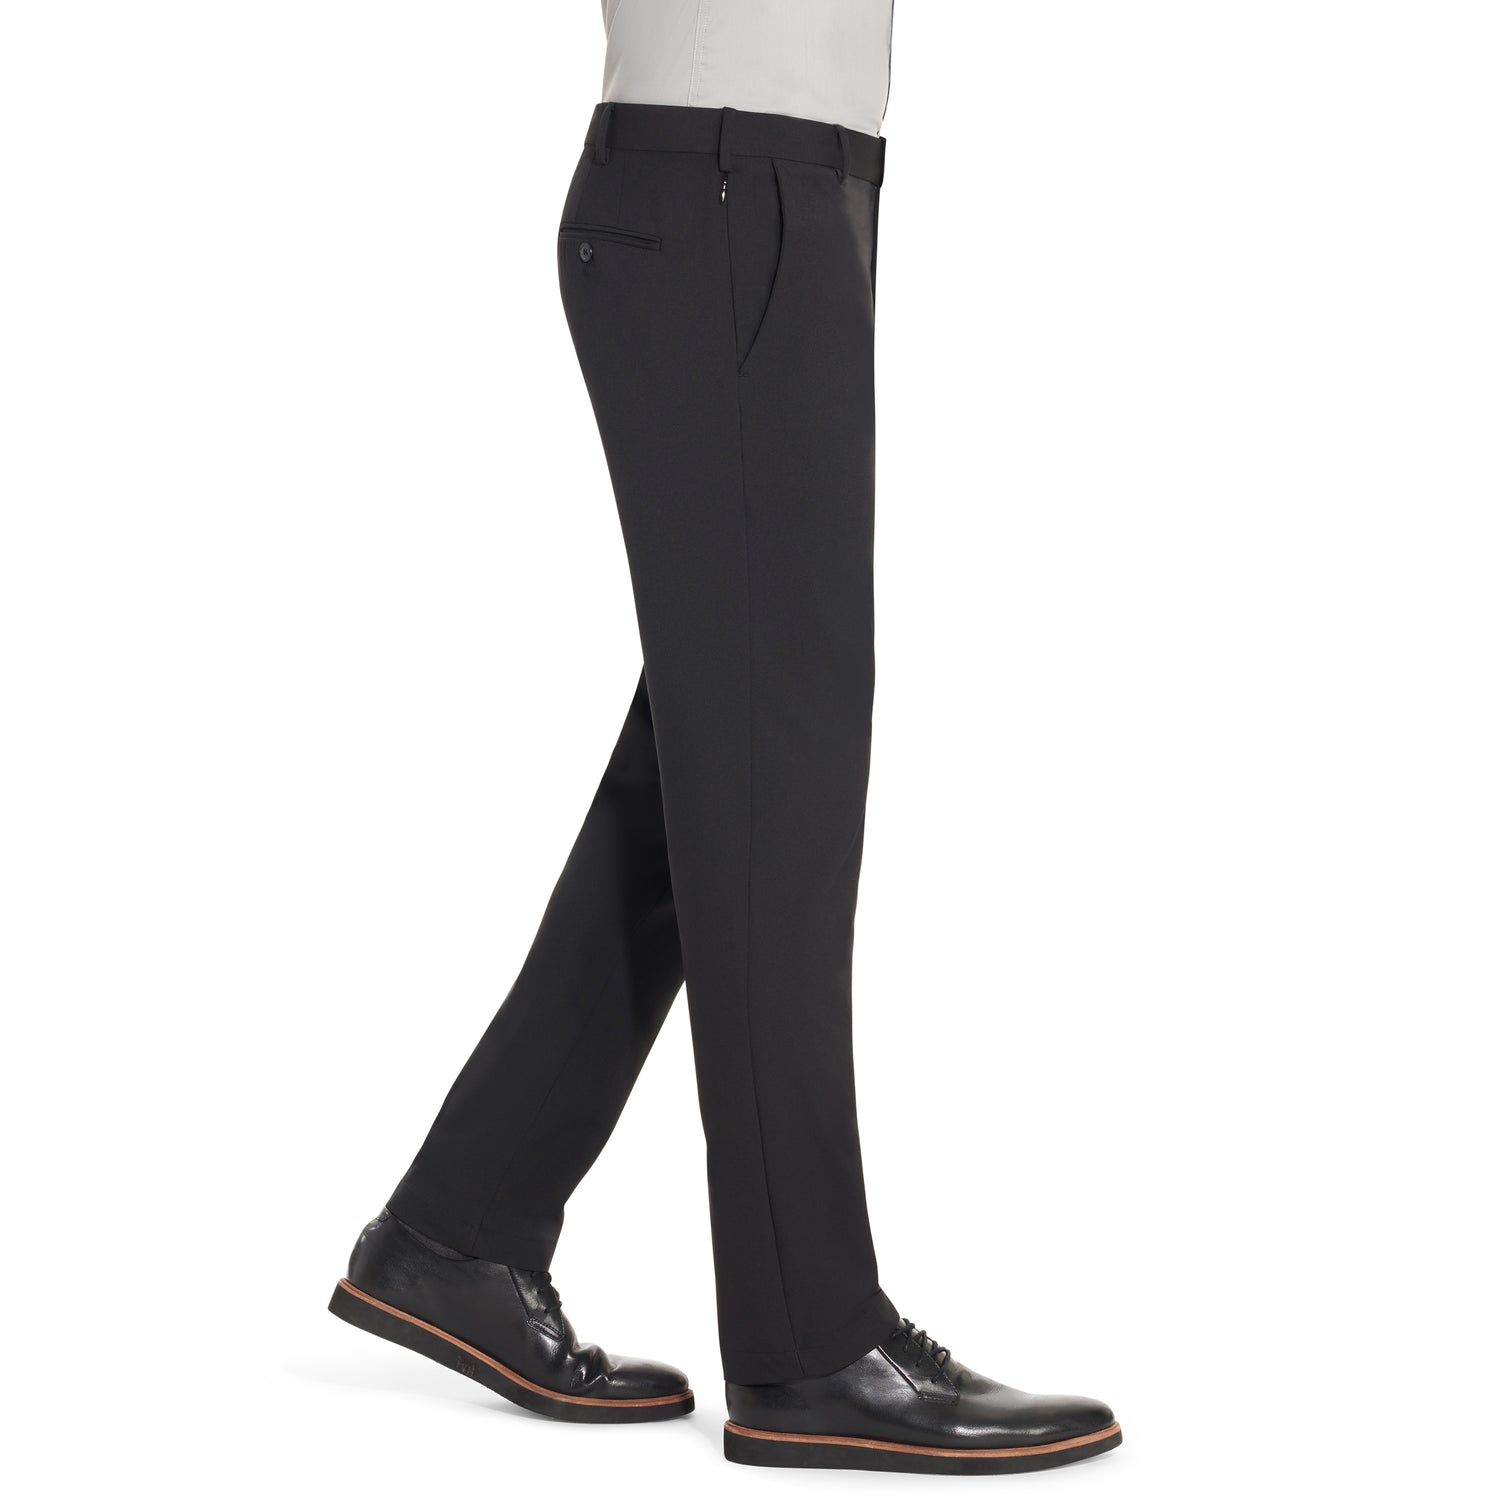 Flex 3 Flat Front Straight Leg Dress Pant - Slim Fit